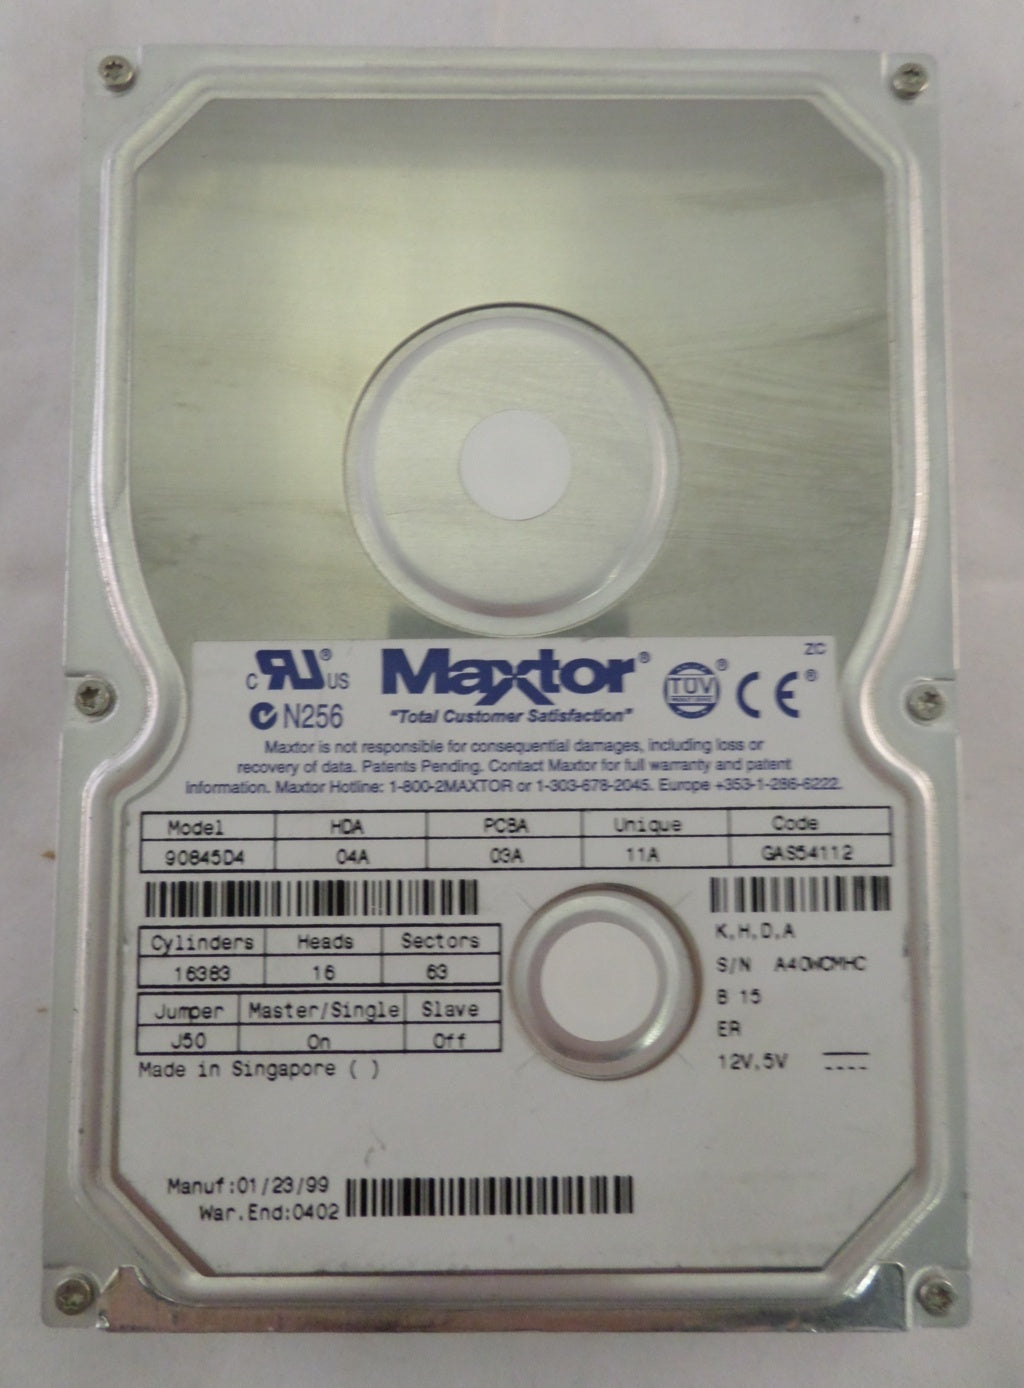 MC2023_90845D4_Dell Maxtor 8GB IDE 5400rpm 3.5in HDD - Image2